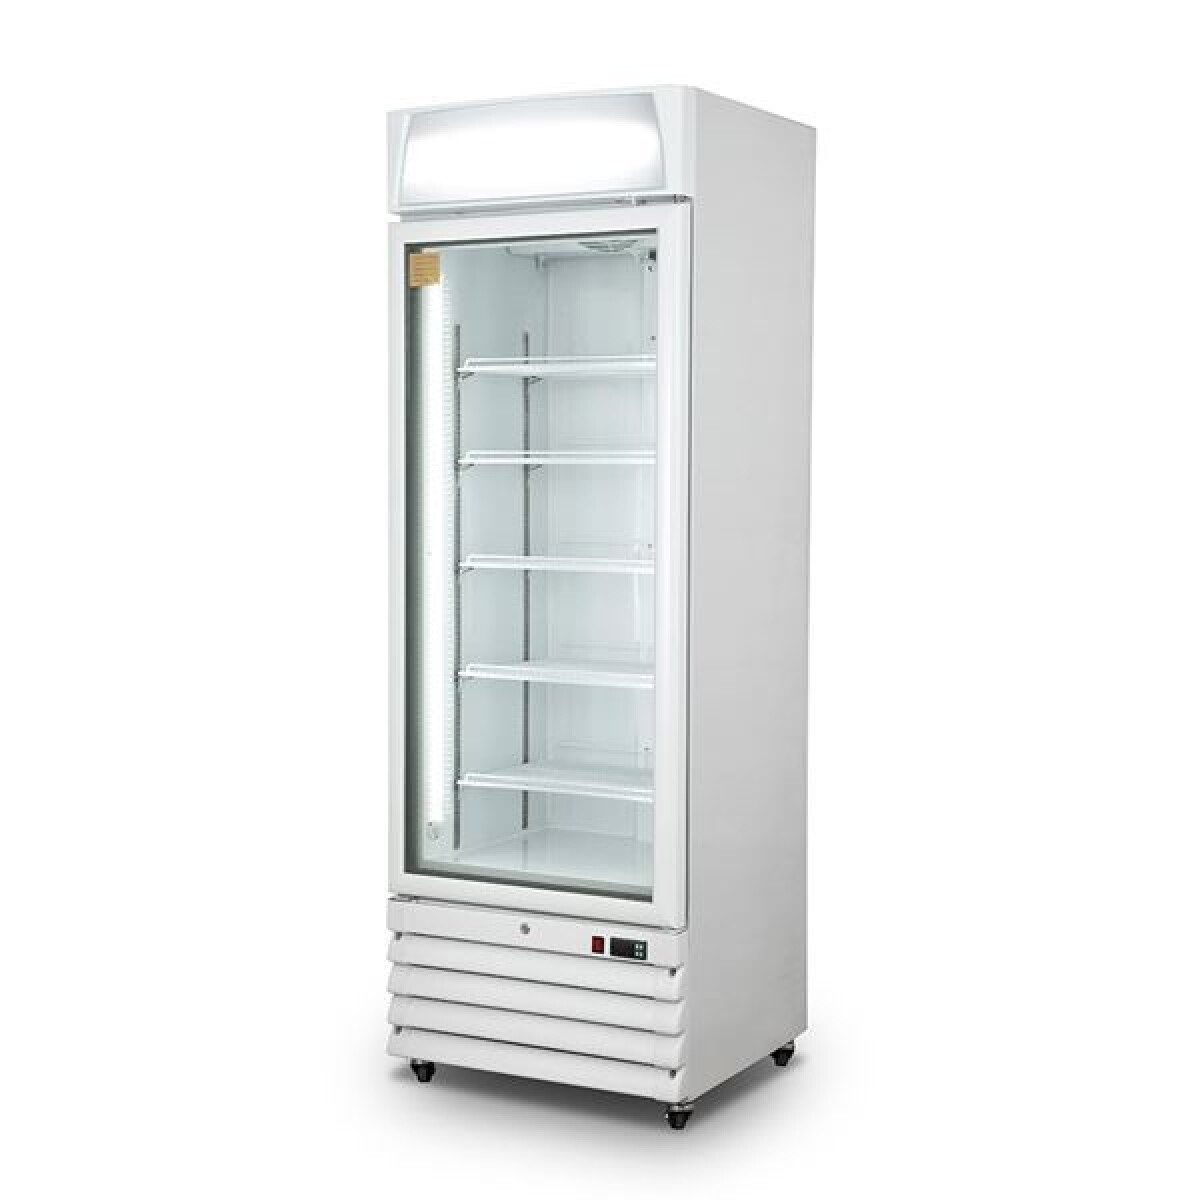 Freezer vertical 1 puerta vidrio 400 lts Iccold 